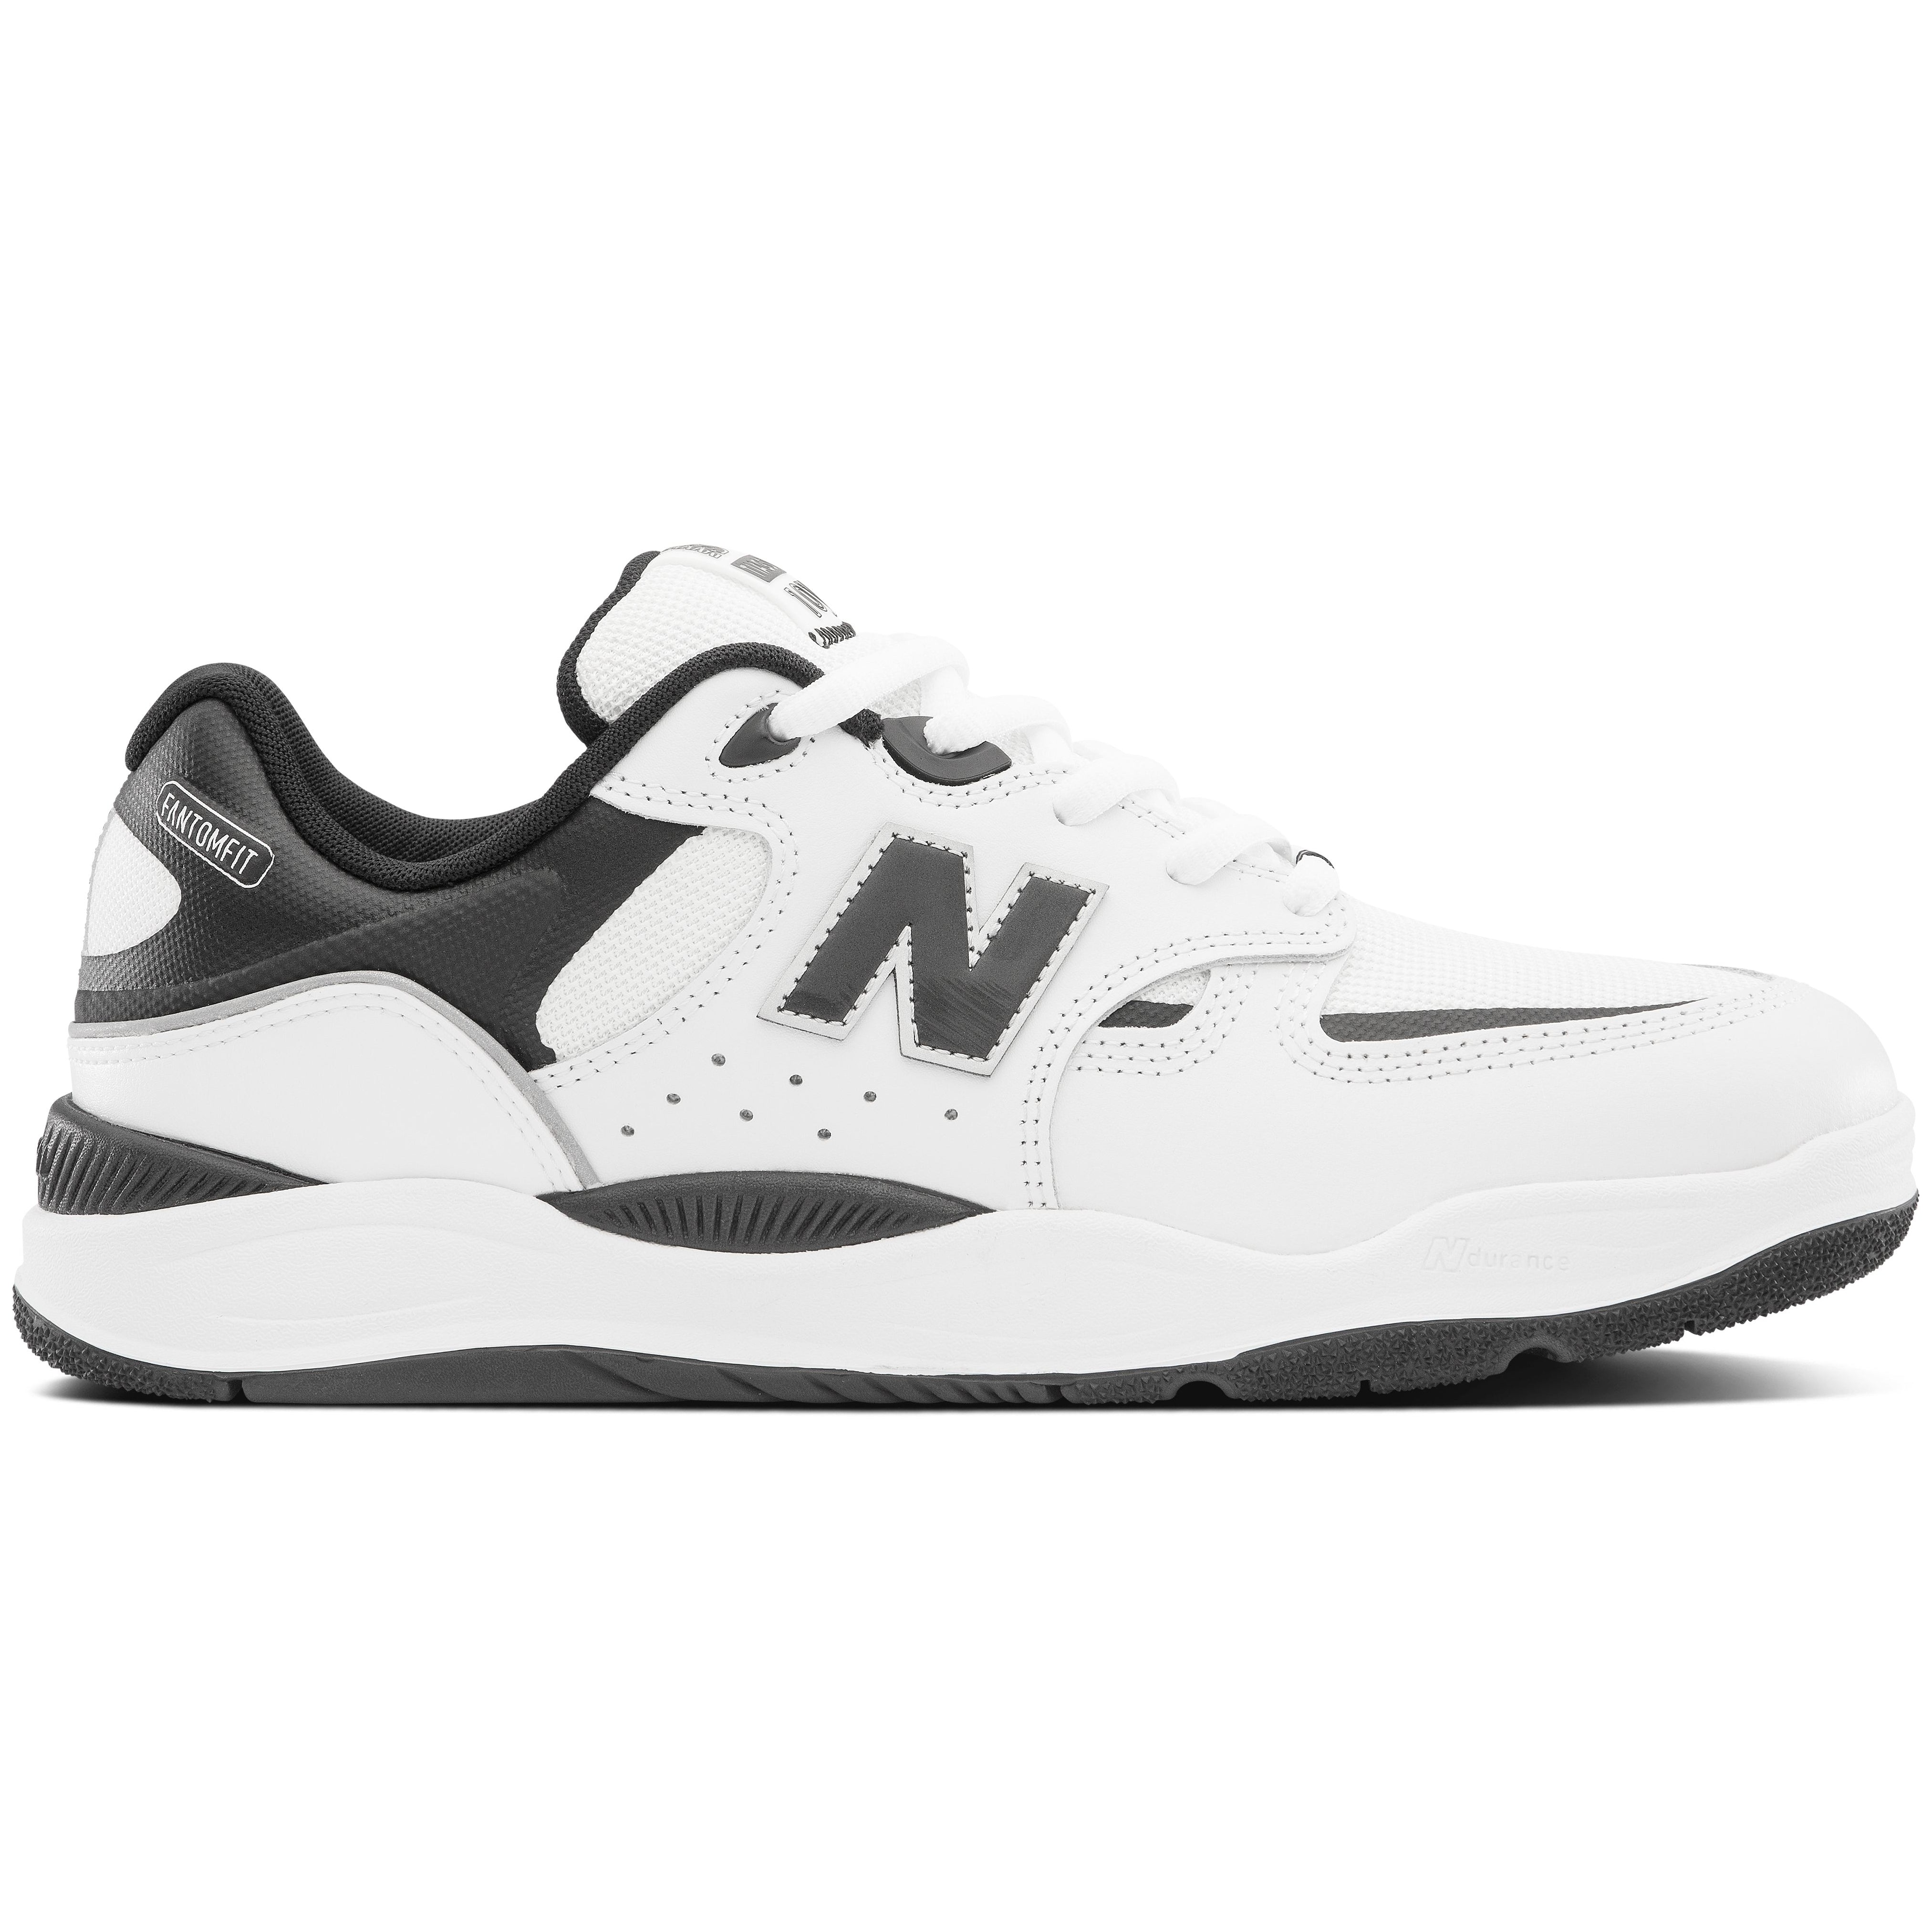 White/Black NM1010 Tiago Lemos NB Numeric Skate Shoe